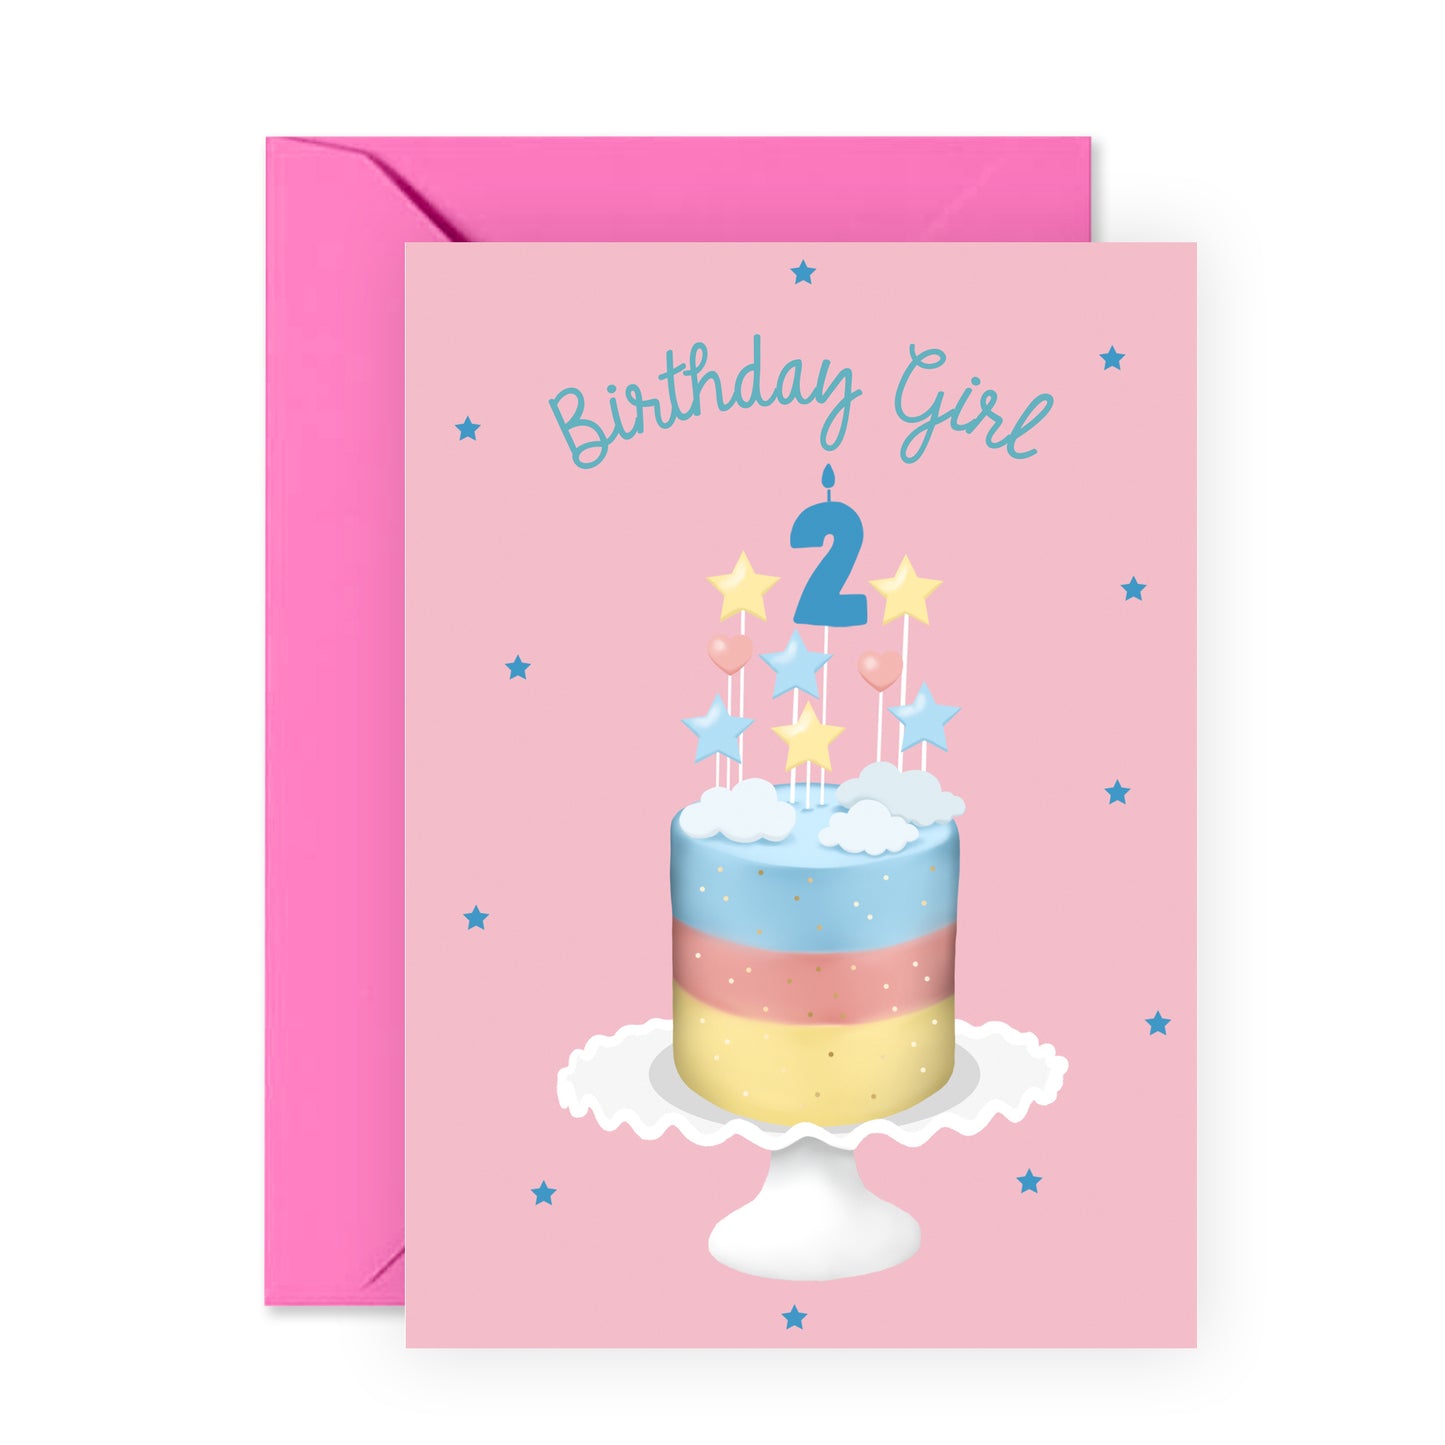 Cute Birthday Card - Birthday Girl Two - For Kids Girls Daughter